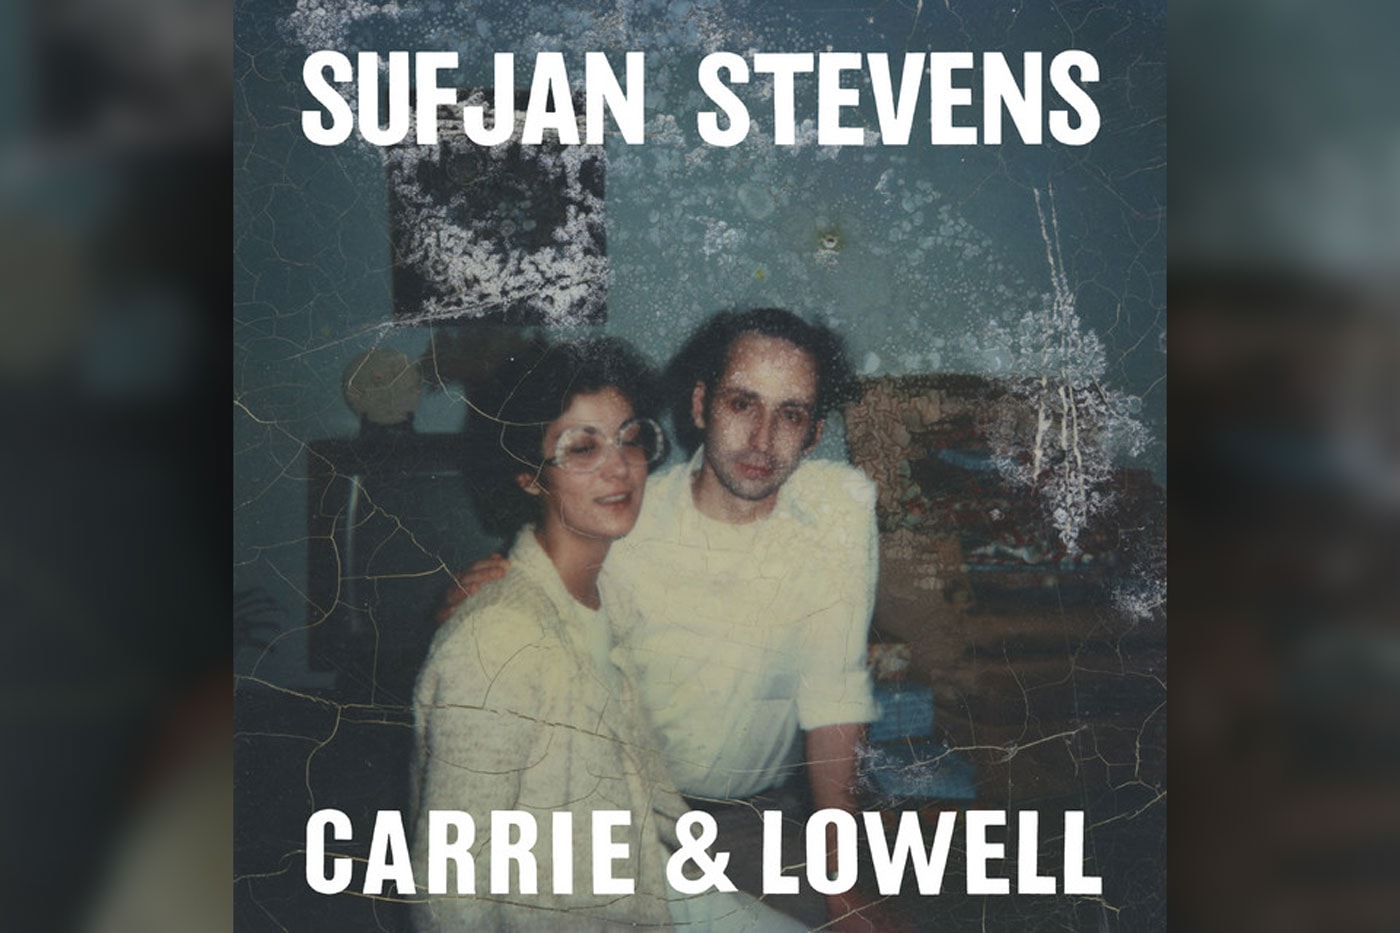 Sufjan Stevens - Blue Bucket of Gold (Remix)